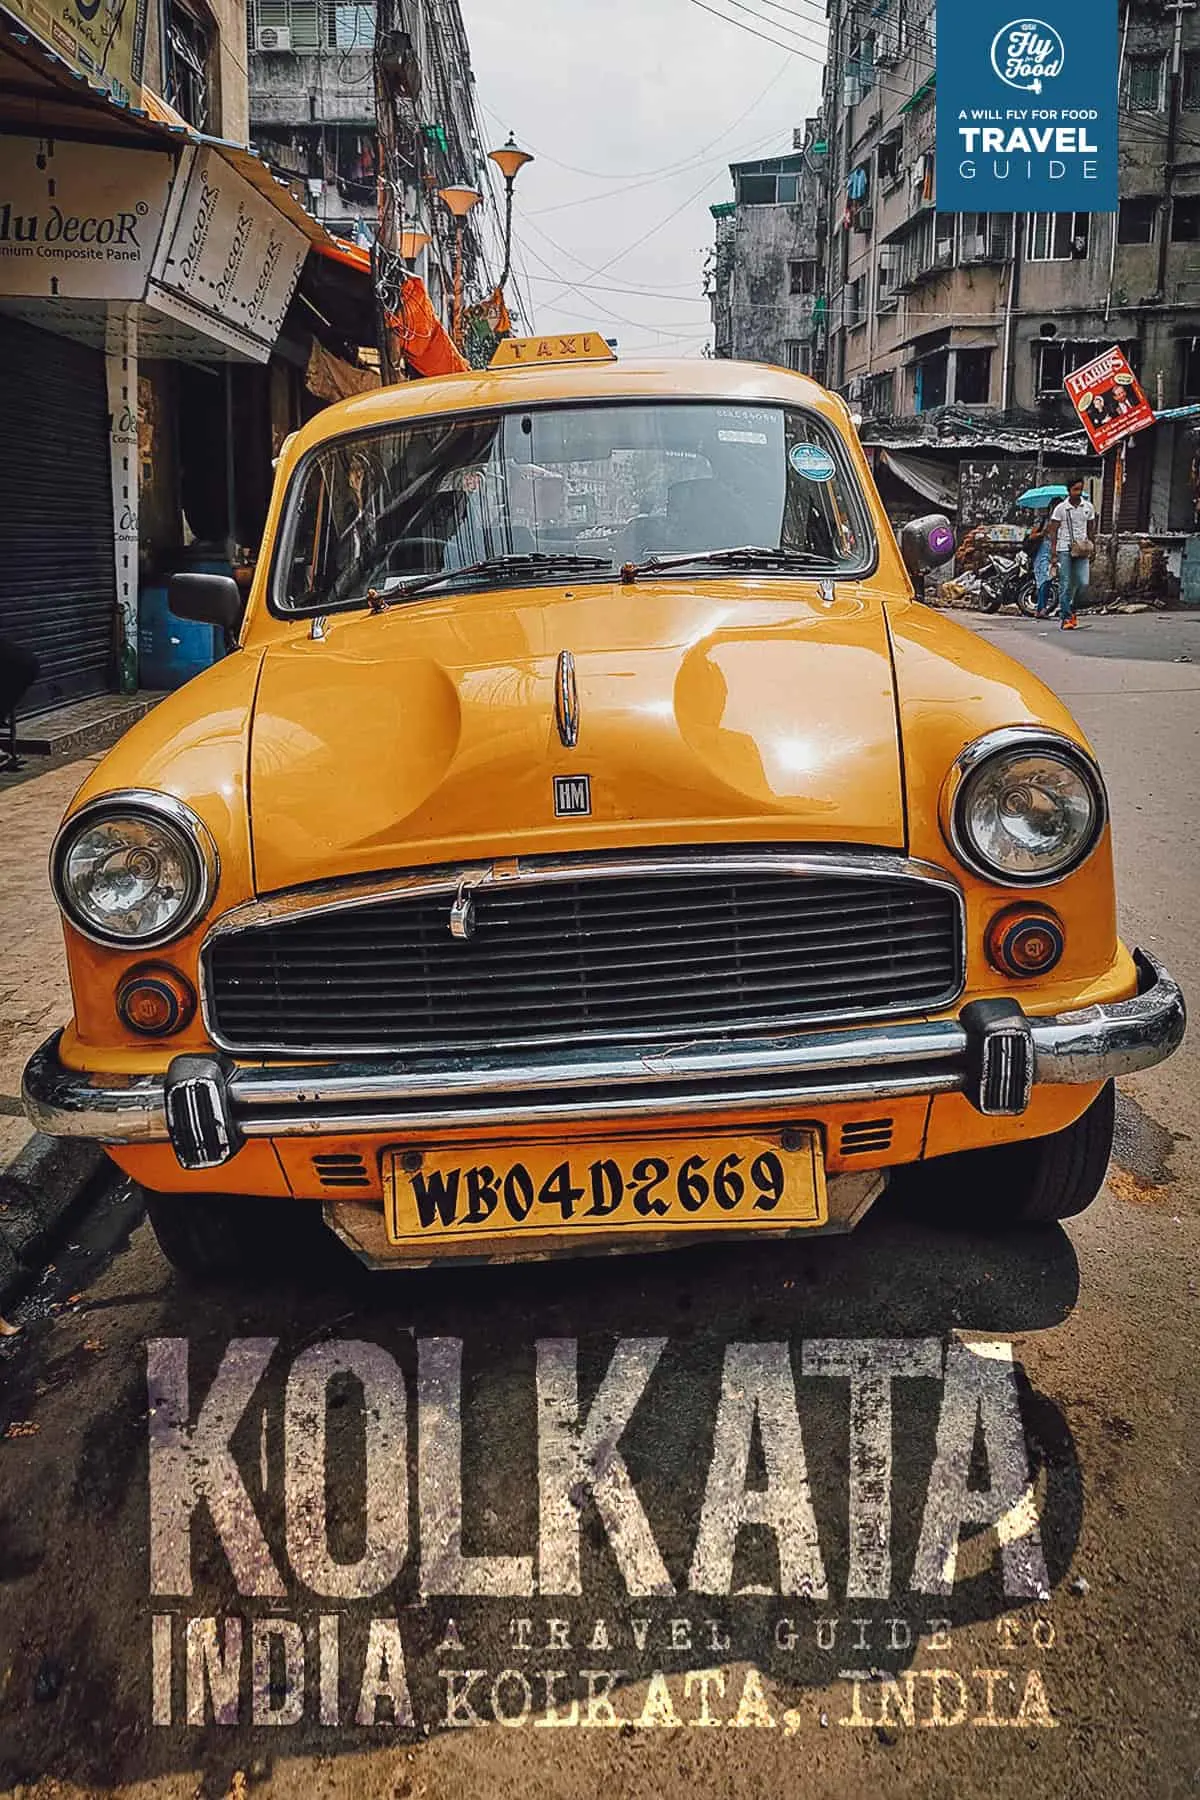 Ambassador taxi in Kolkata, India